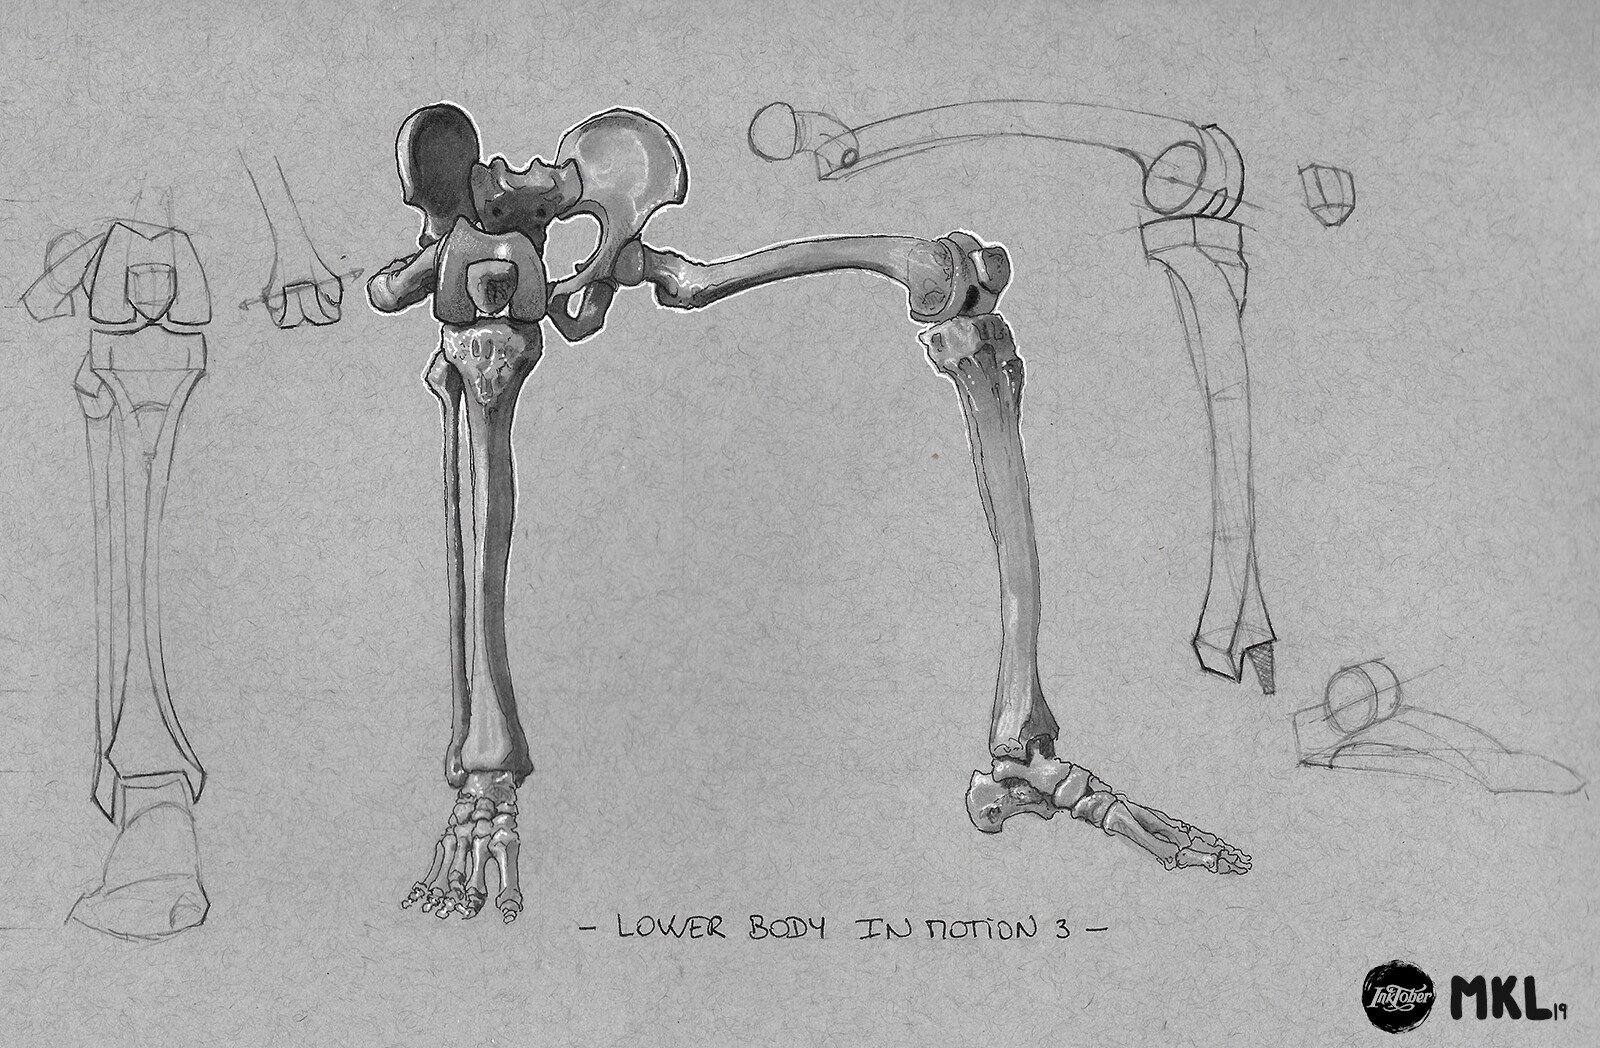 Anatom'Inktober day 14 : Lower body sitting